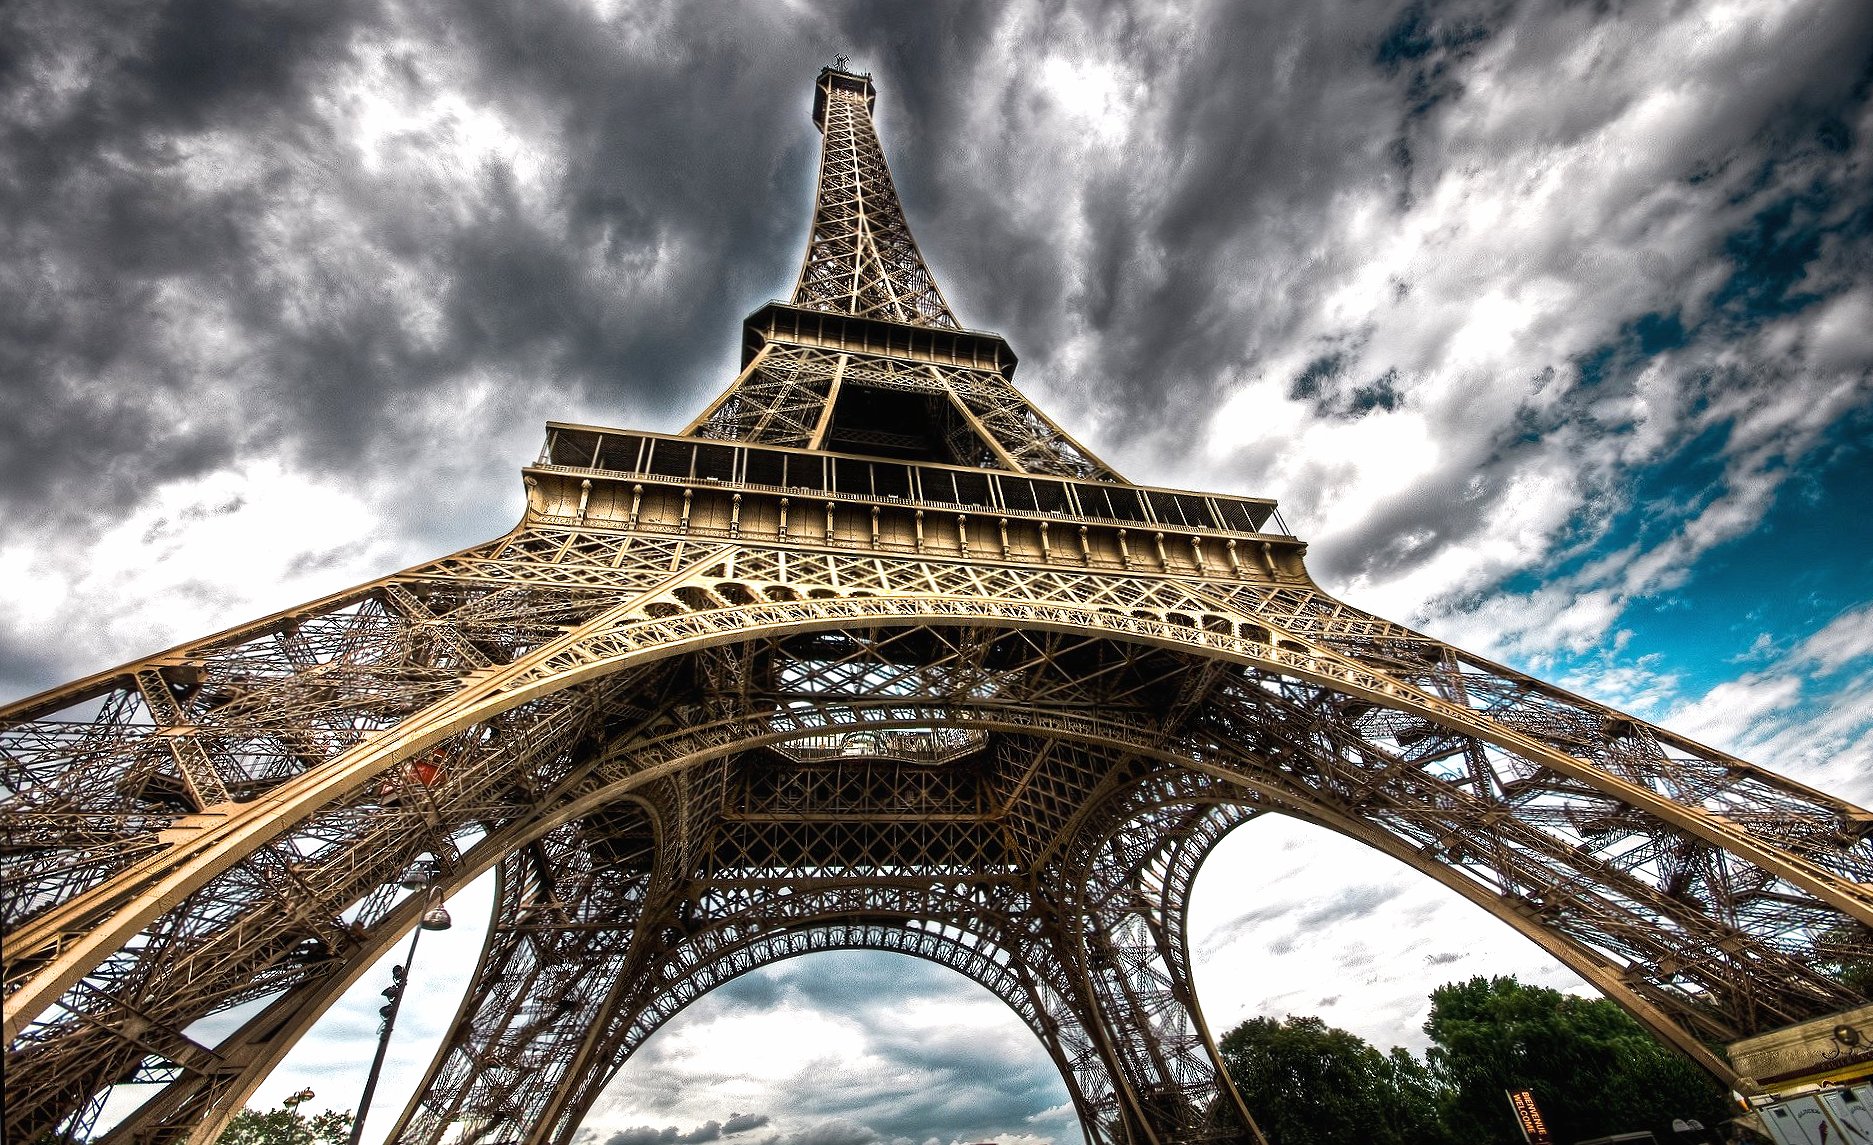 Eiffel tour paris at 1024 x 1024 iPad size wallpapers HD quality